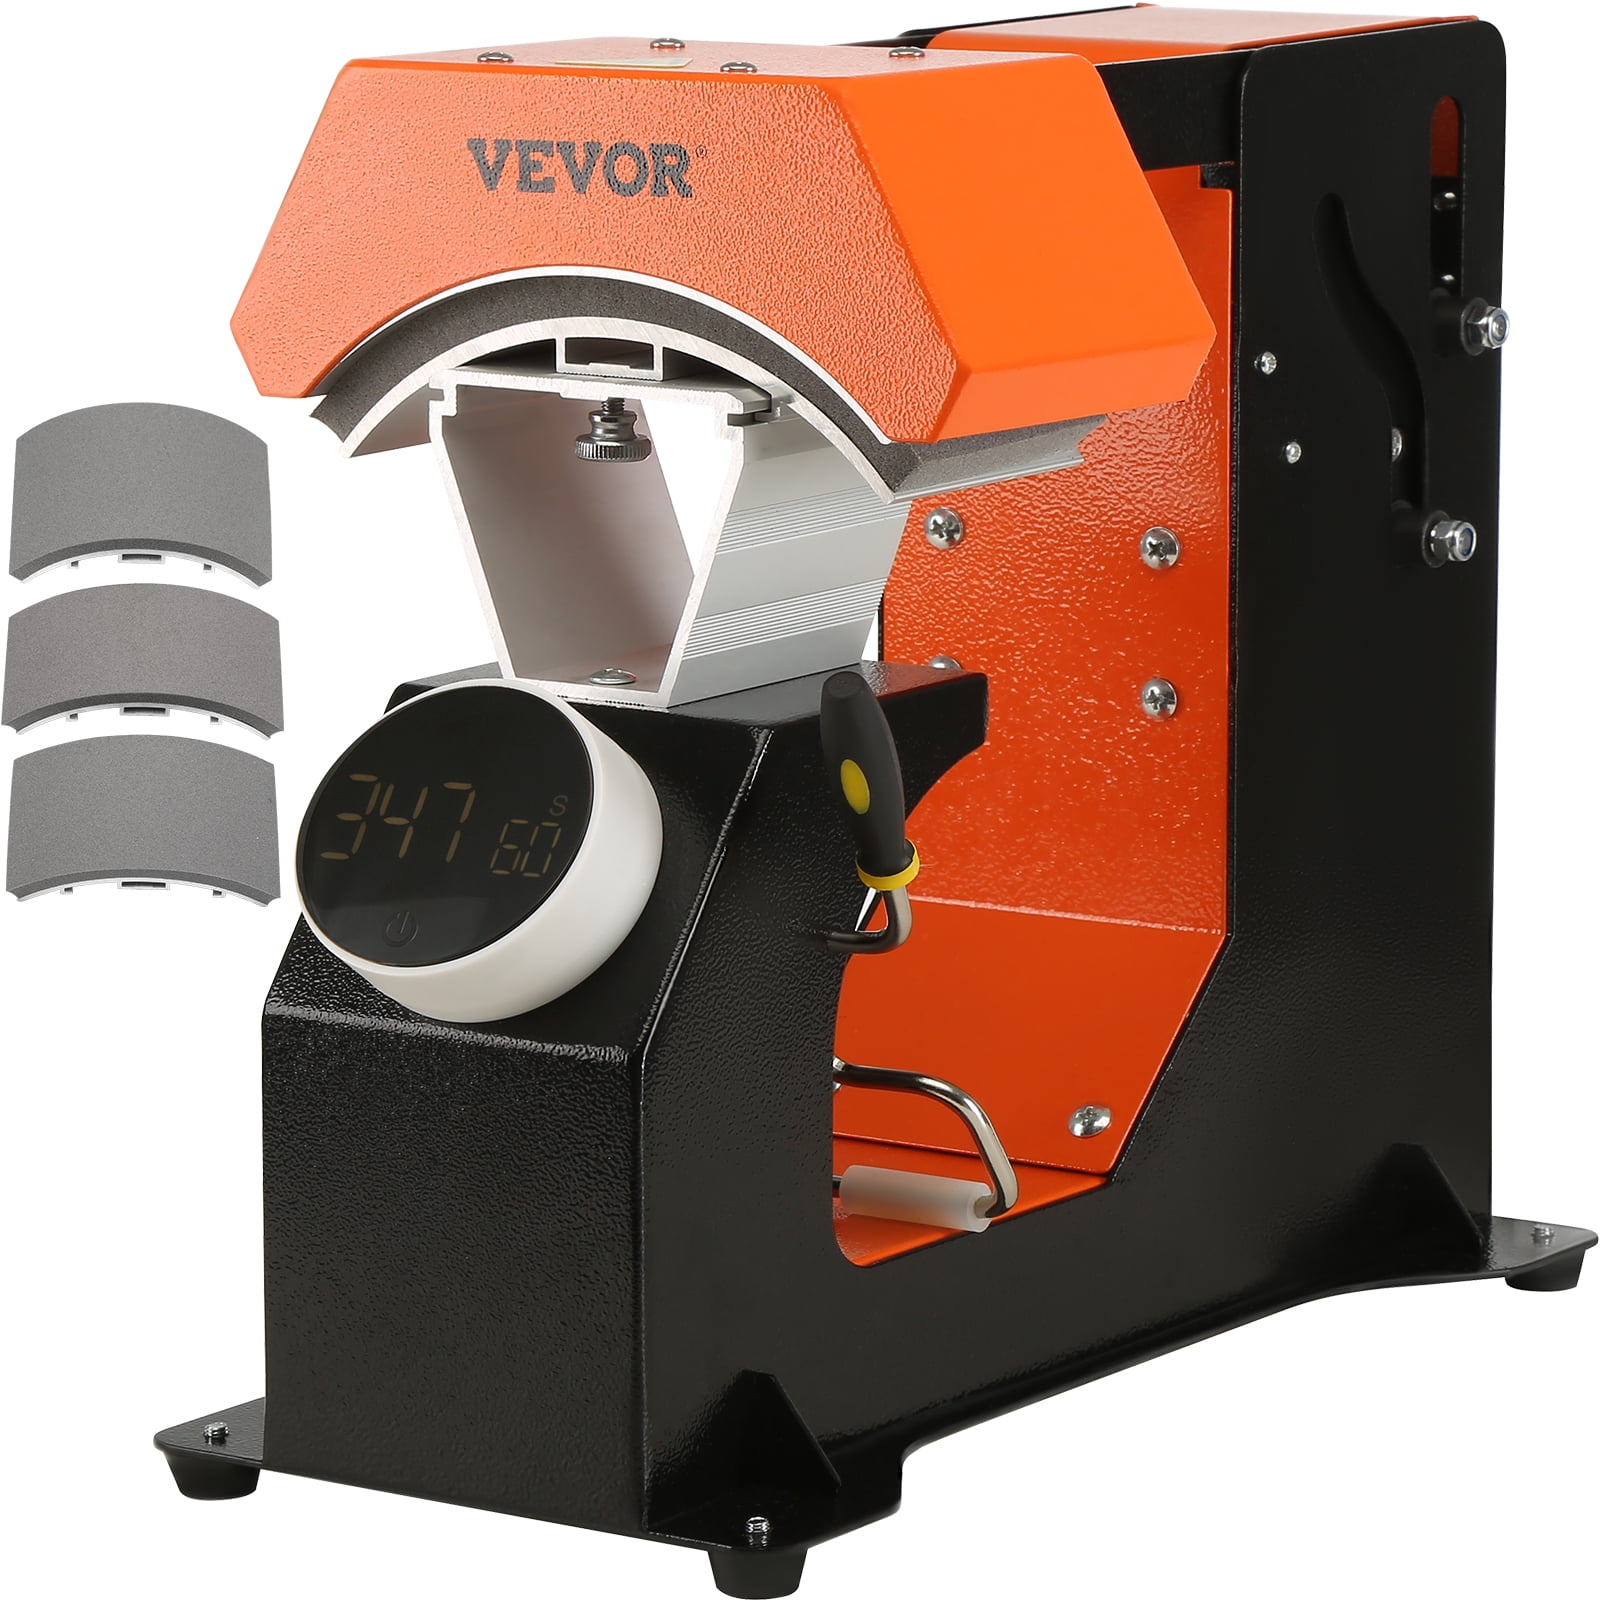 VEVOR Heat Press Machine 2In1 15x15in Sublimation Print Transfer